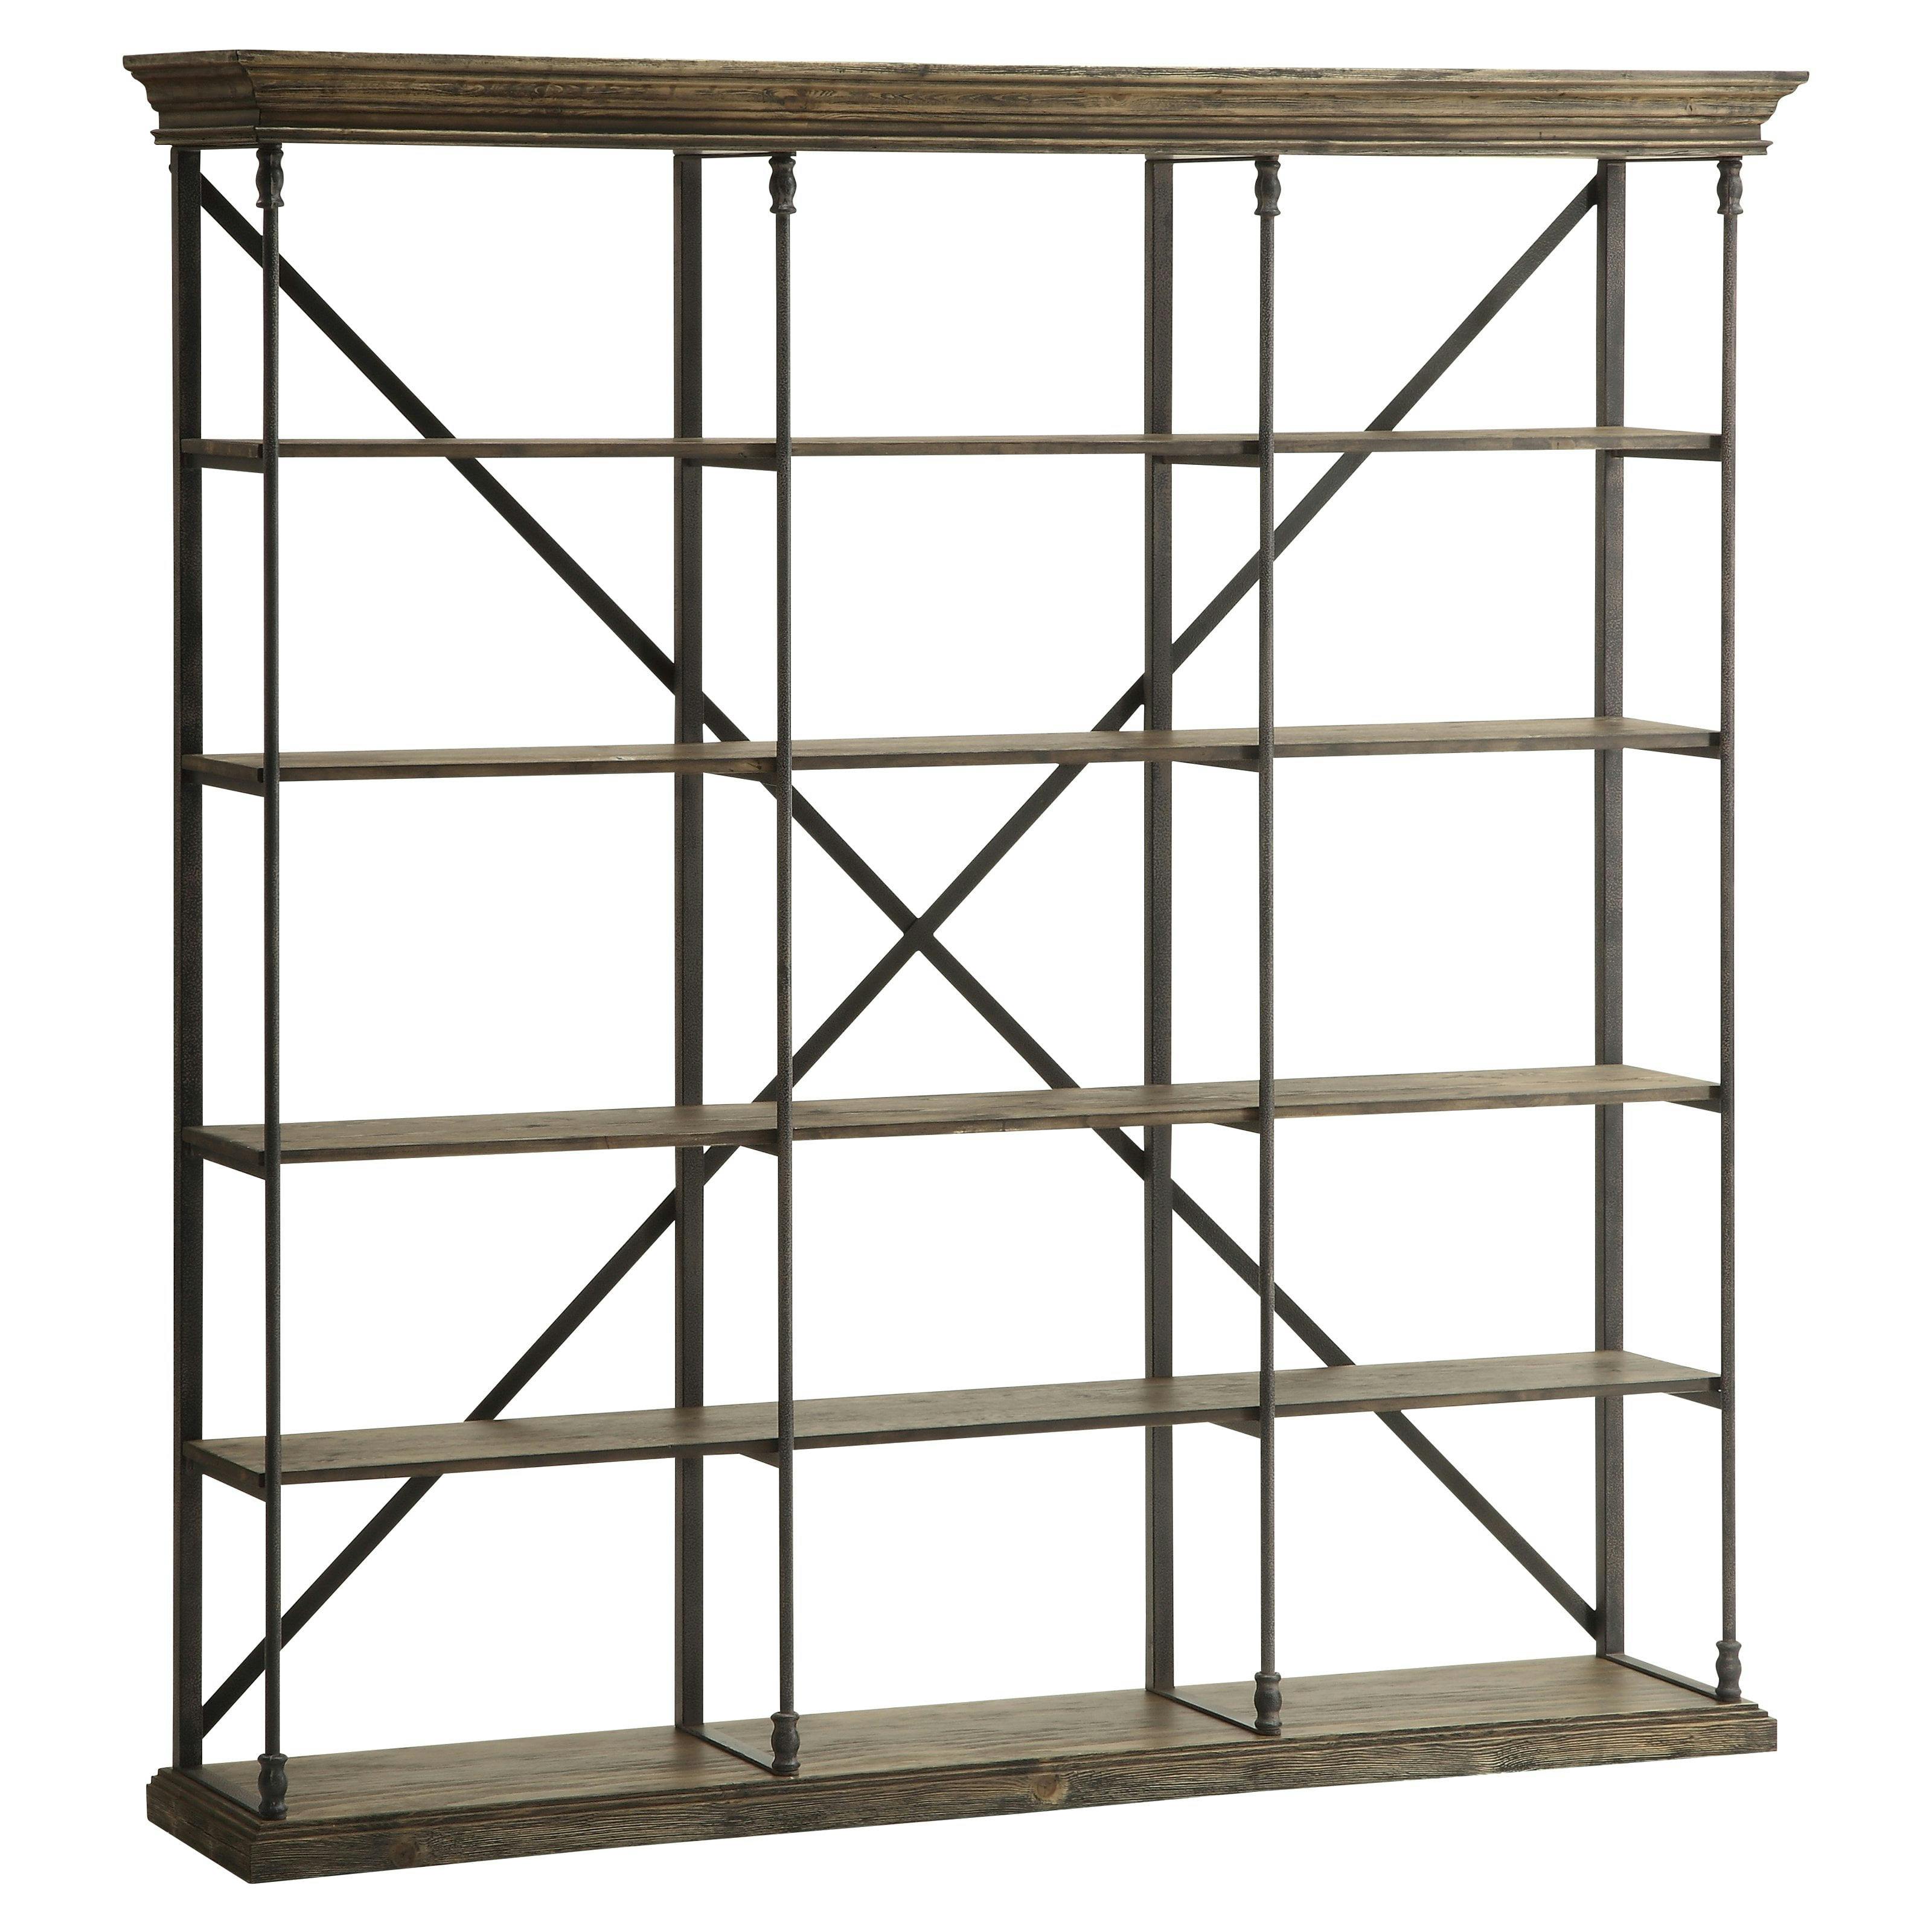 Corbin Medium Brown 5-Shelf Industrial Bookcase with Steel Frame